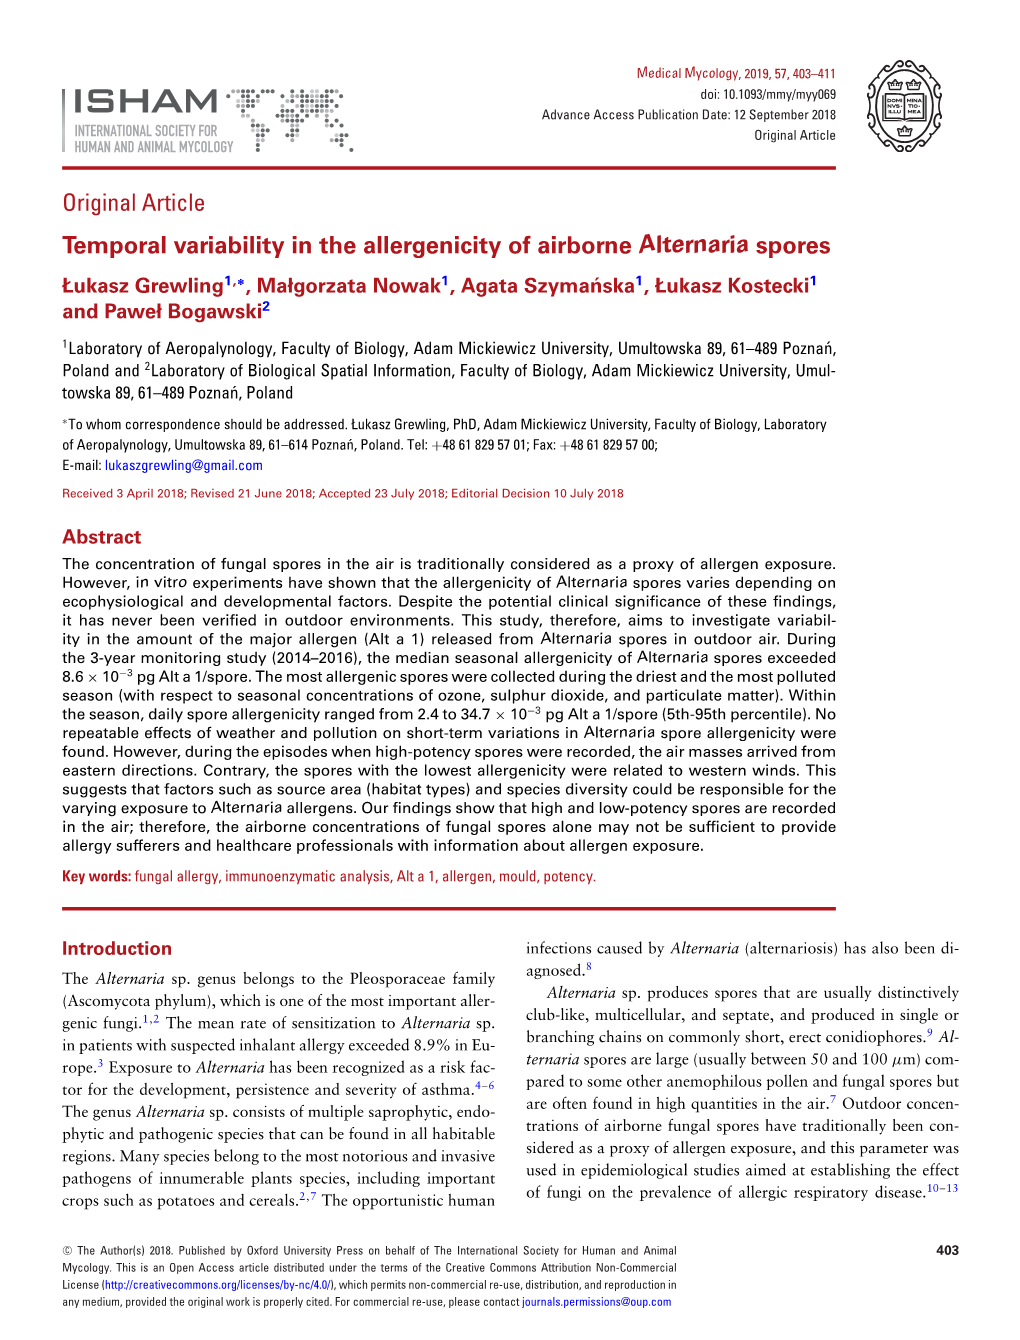 Temporal Variability in the Allergenicity of Airborne Alternaria Spores